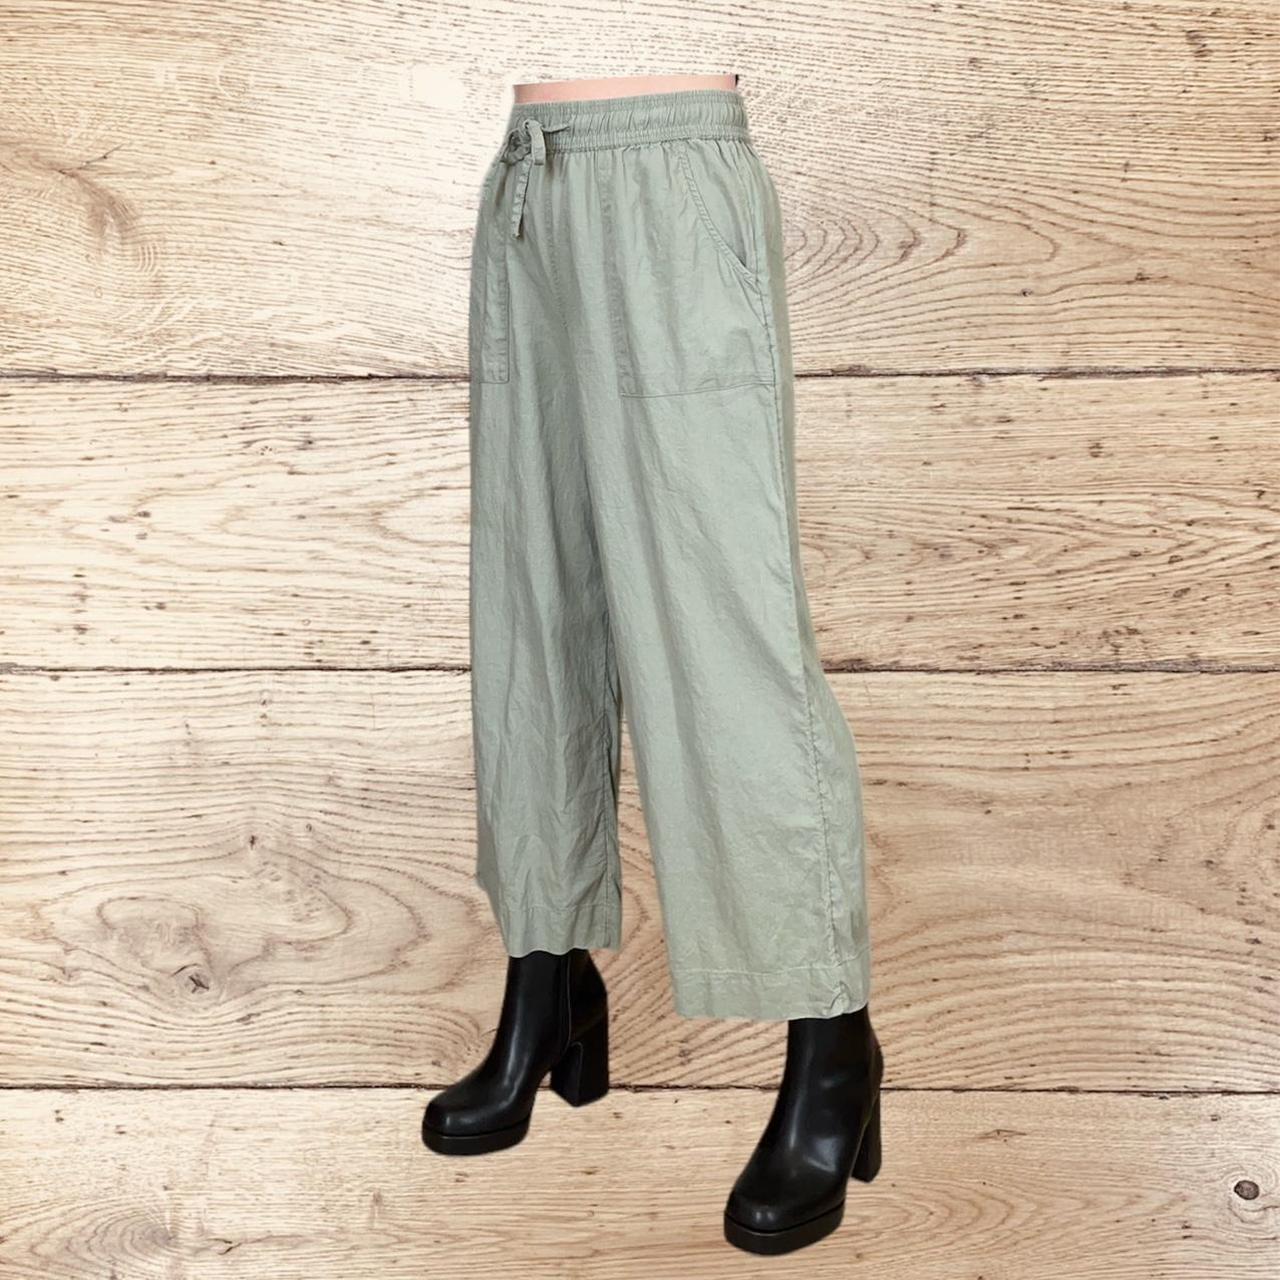 Cynthia Rowley wide-leg linen army green pants with... - Depop